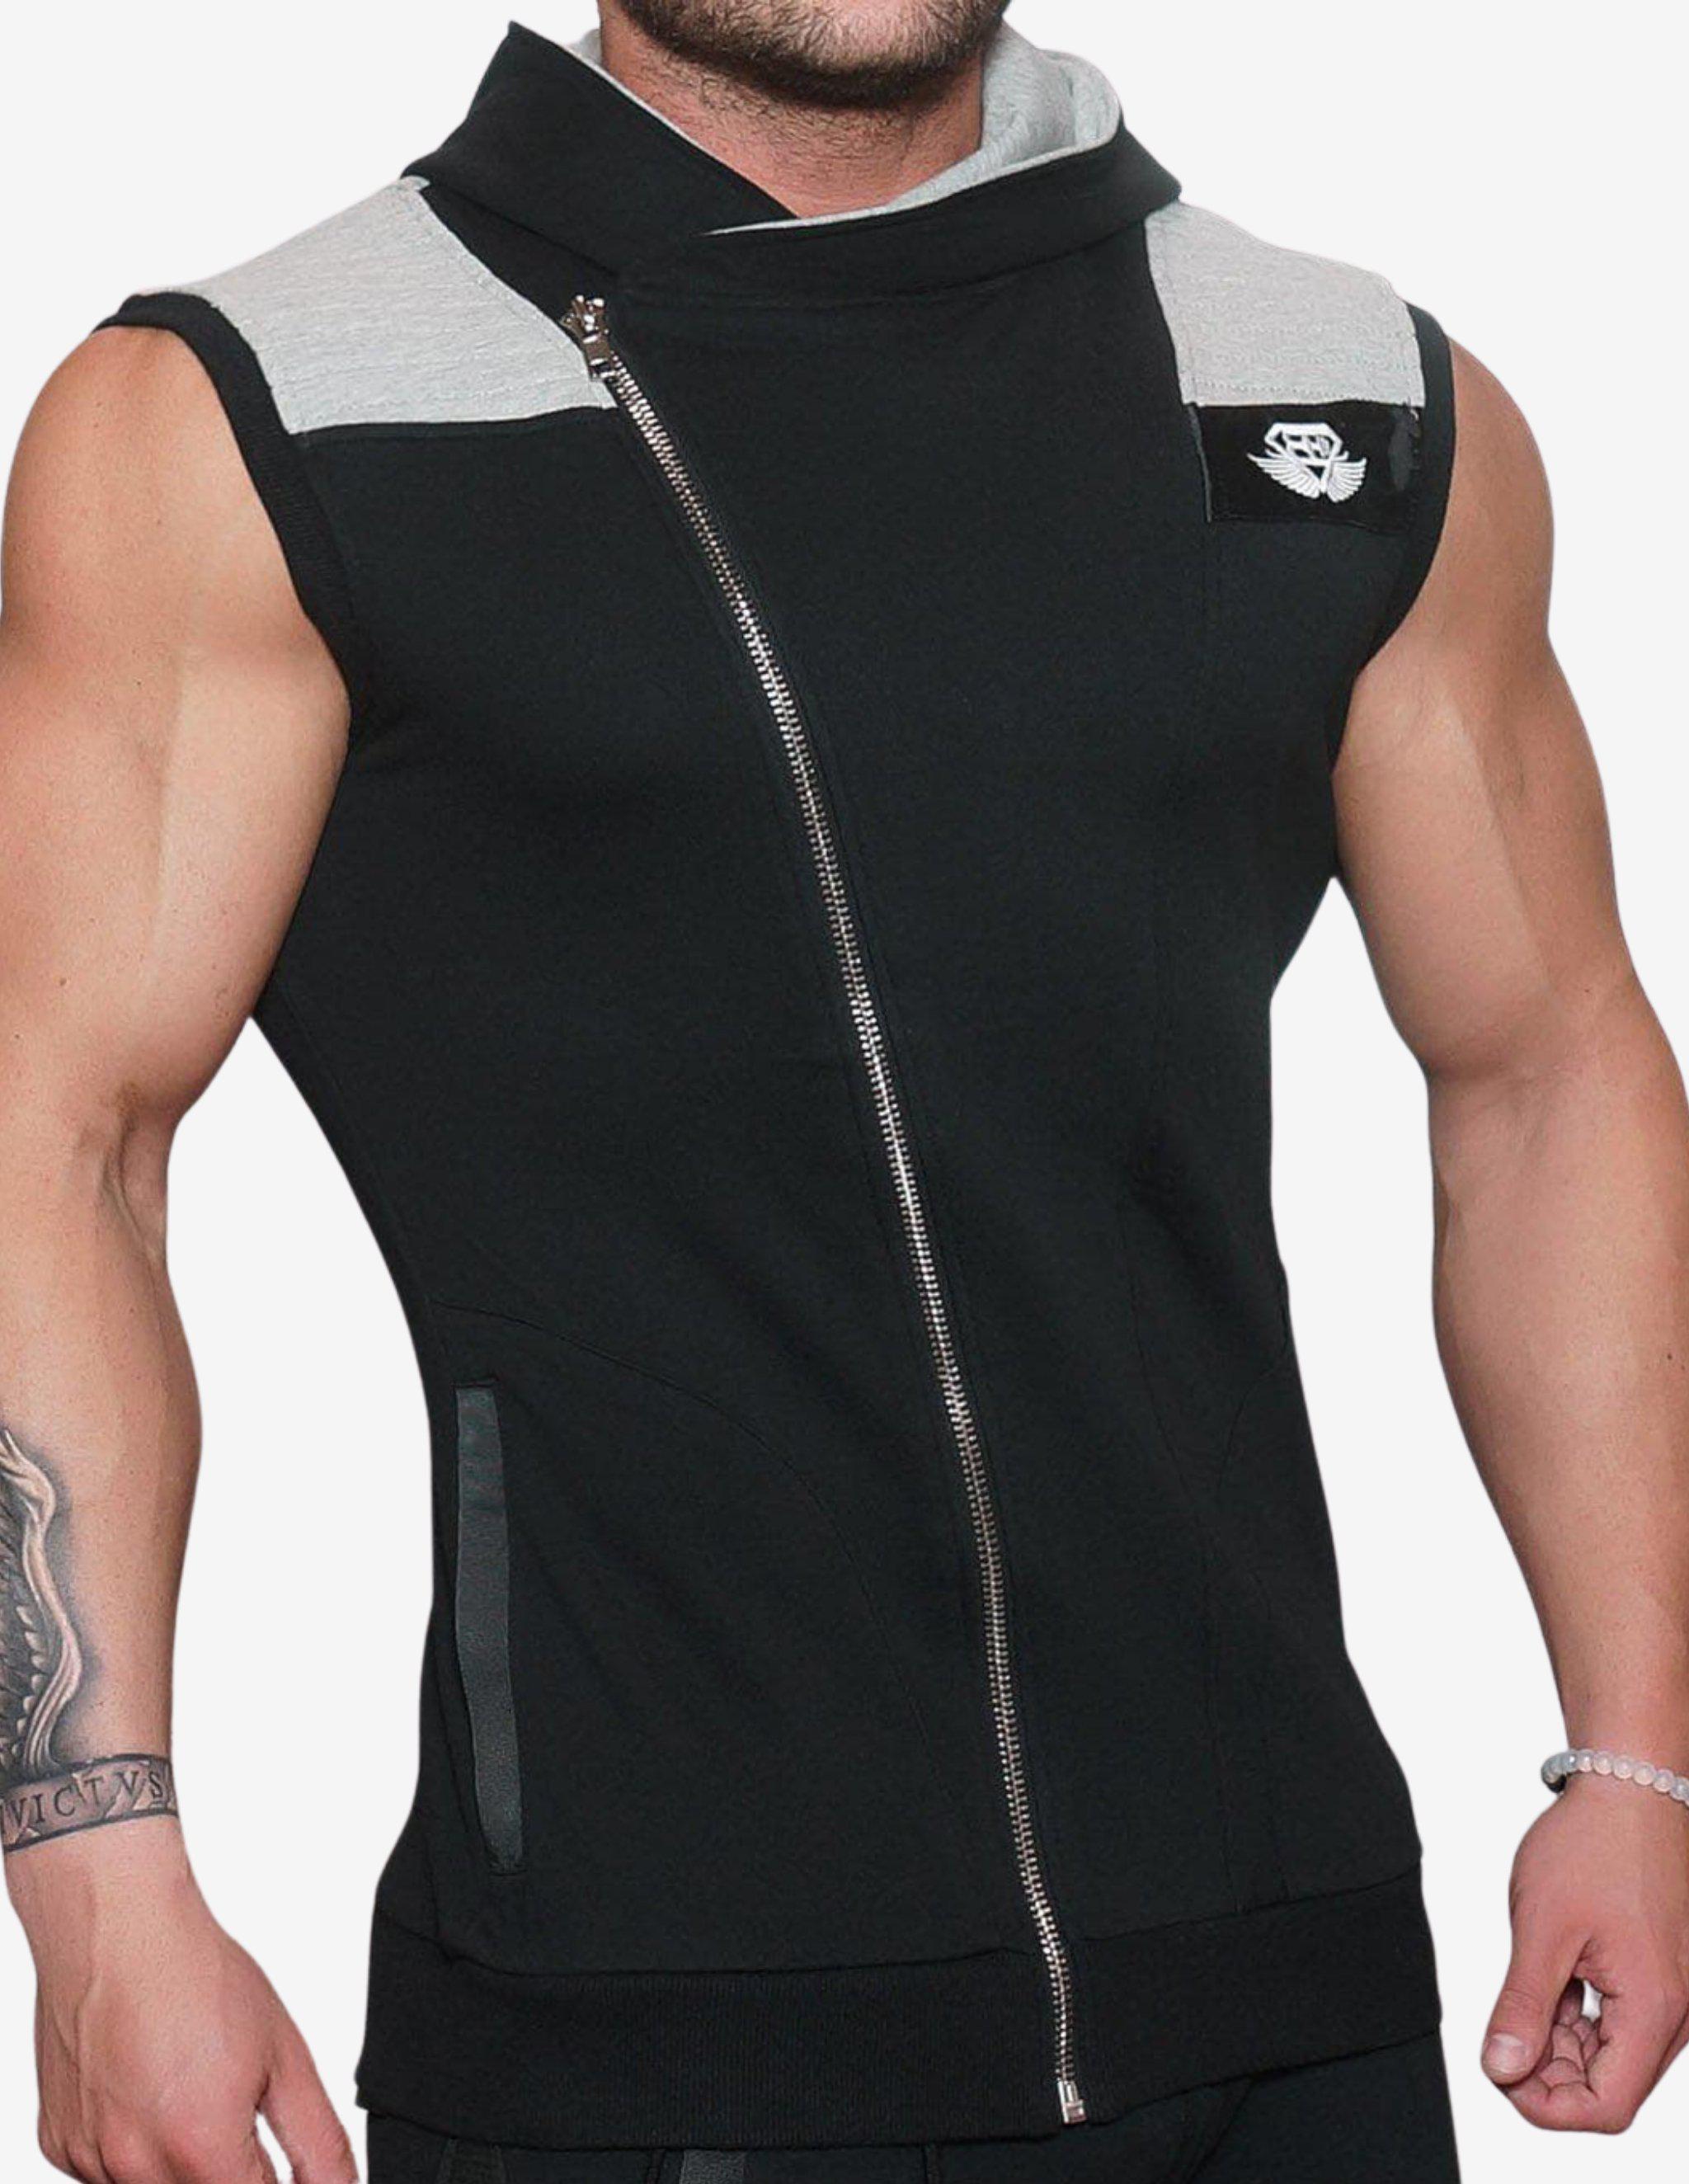 YUREI Sleeveless vest – BLACK & LIGHT GREY ACCENTS-Hoodie Man-Body Engineers-Guru Muscle